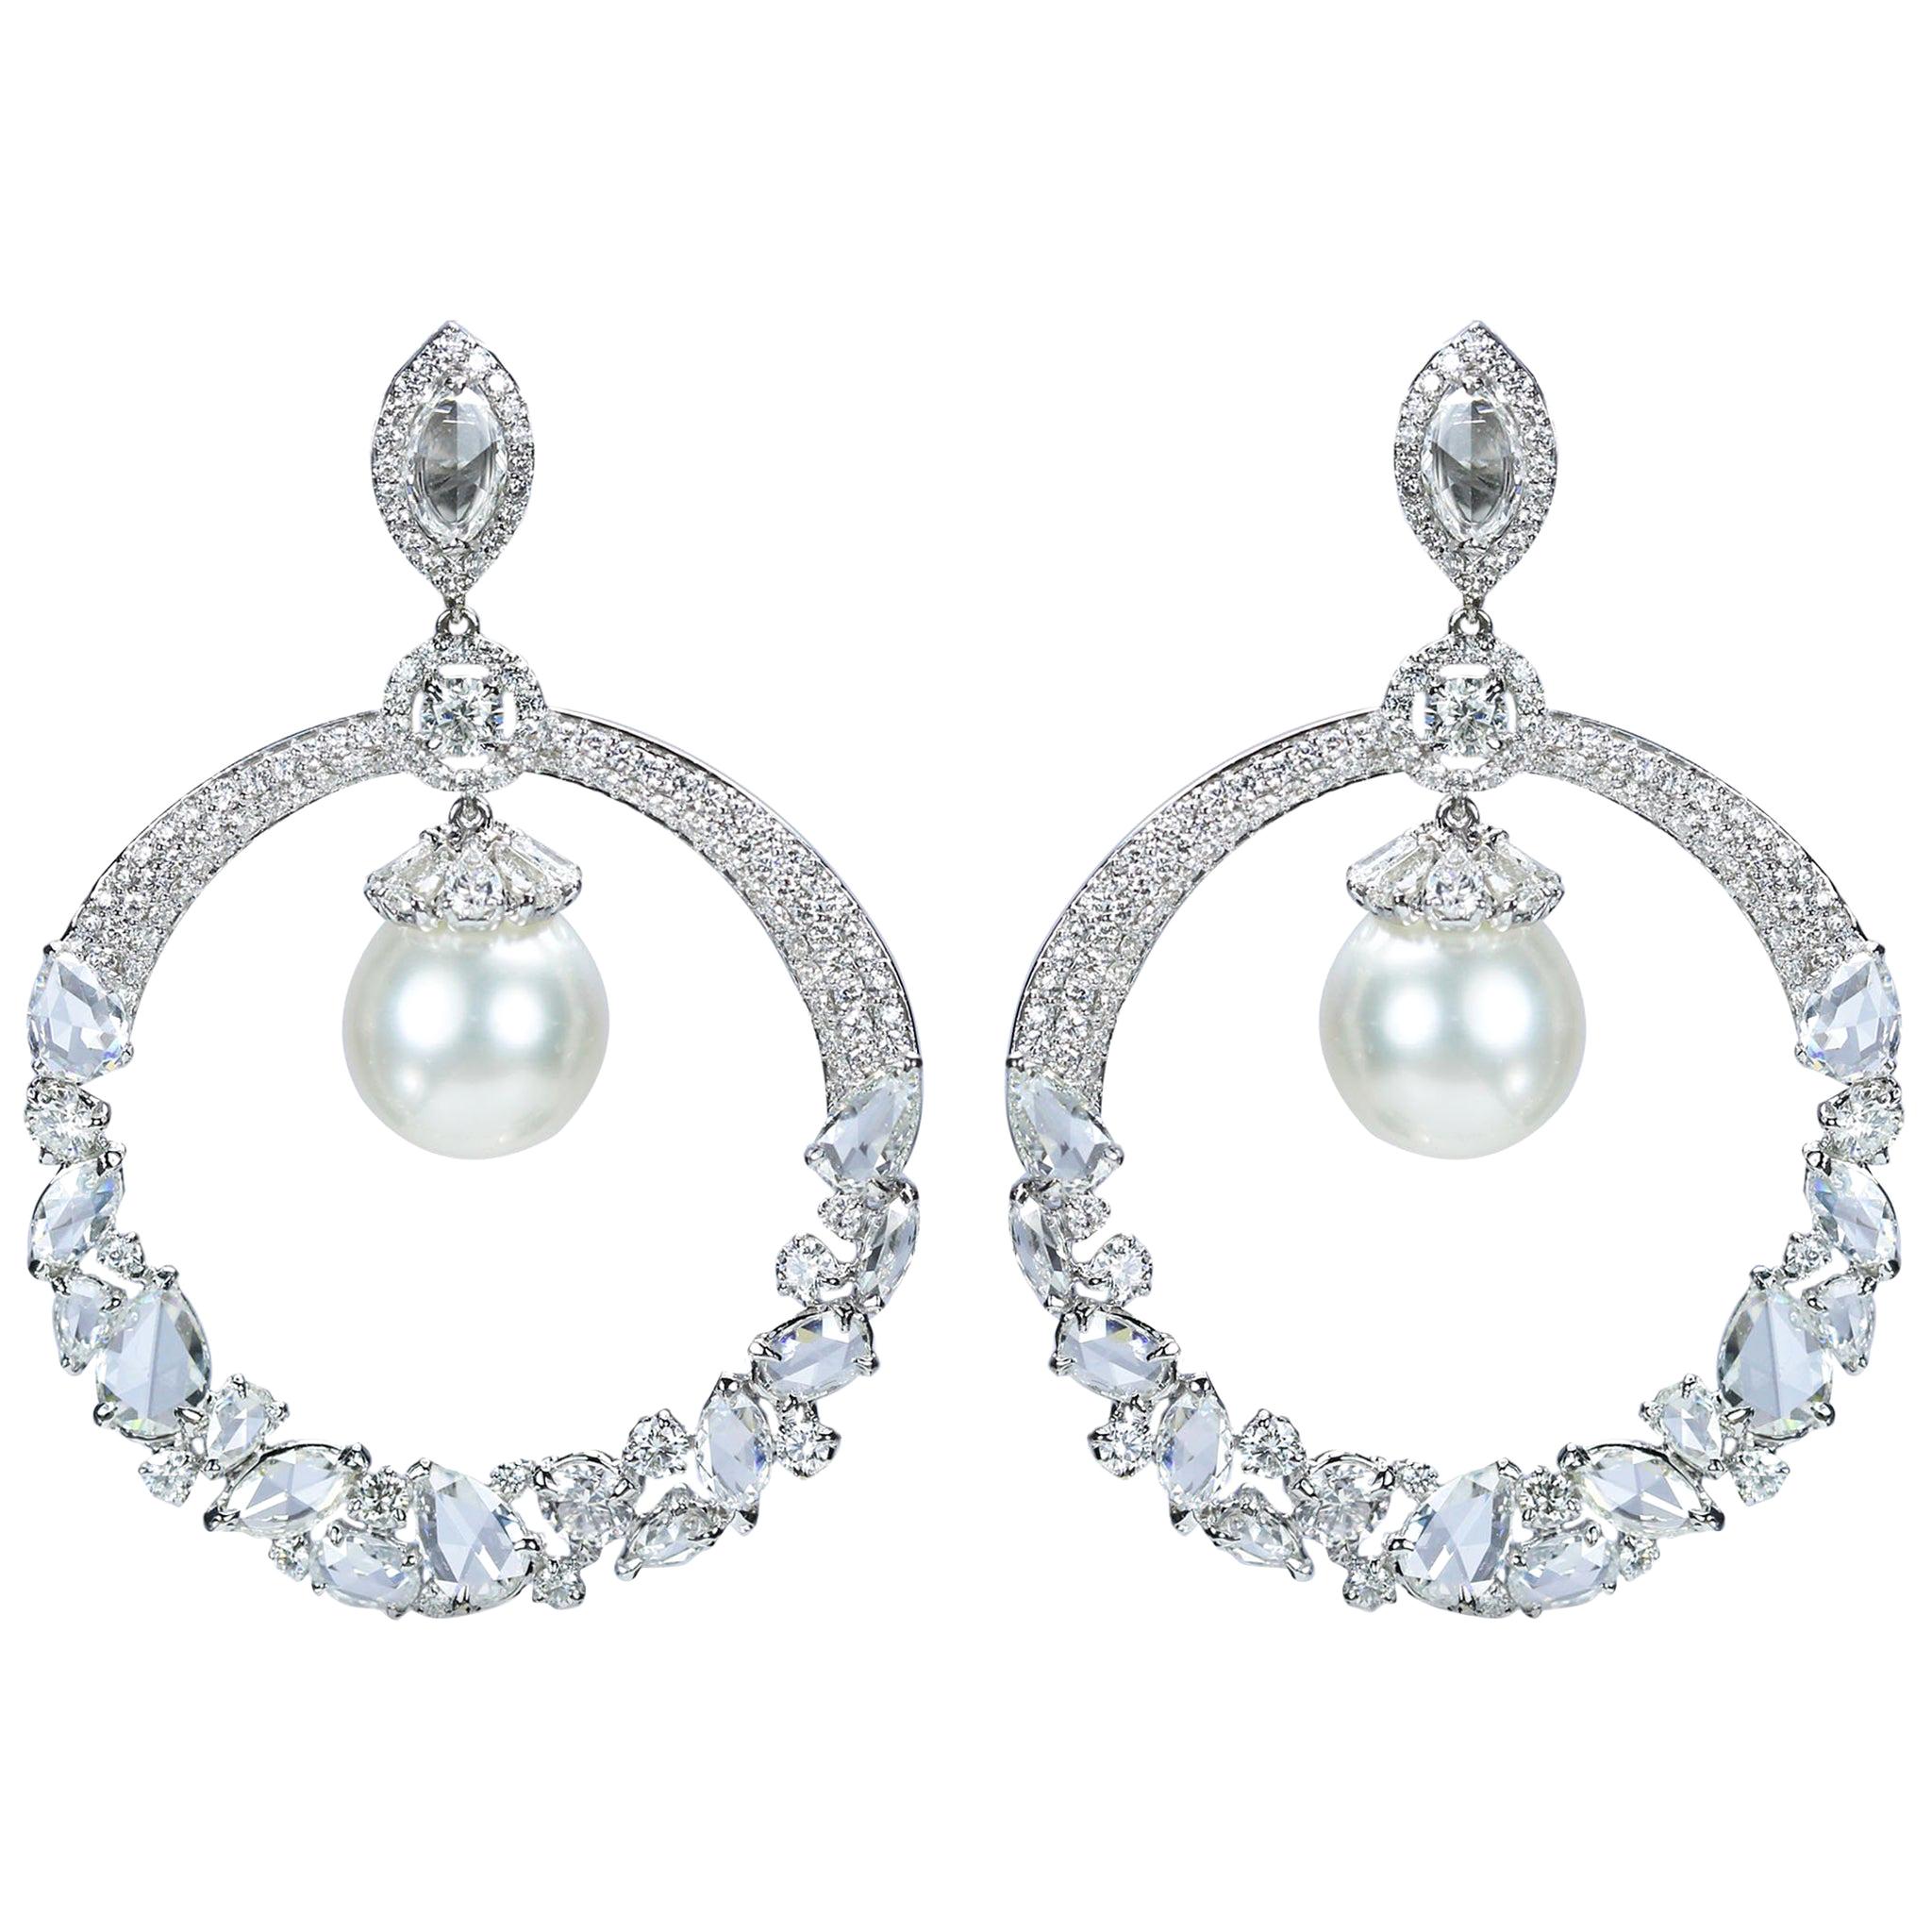 Studio Rêves Diamonds and South Sea Pearls Dangling Earrings in 18 Karat Gold